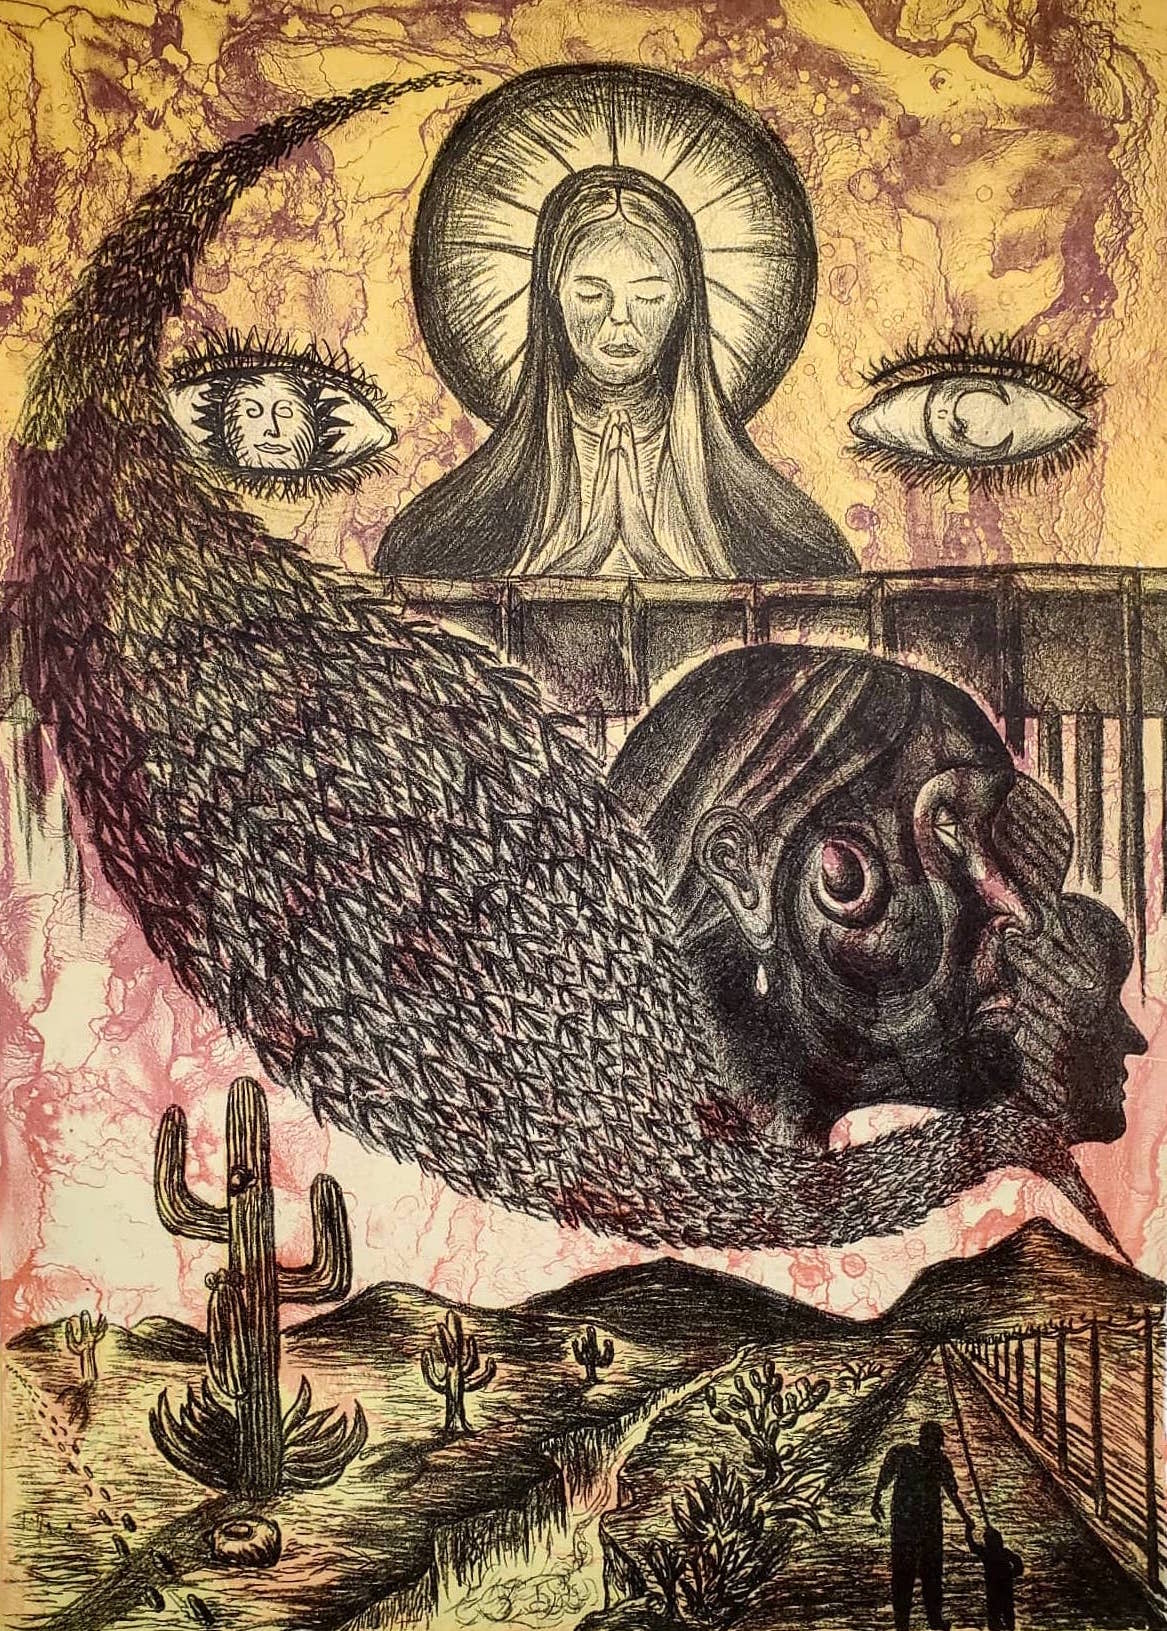 Migracion de Aves, screenprint and lithograph print by Roberto Torres Mata